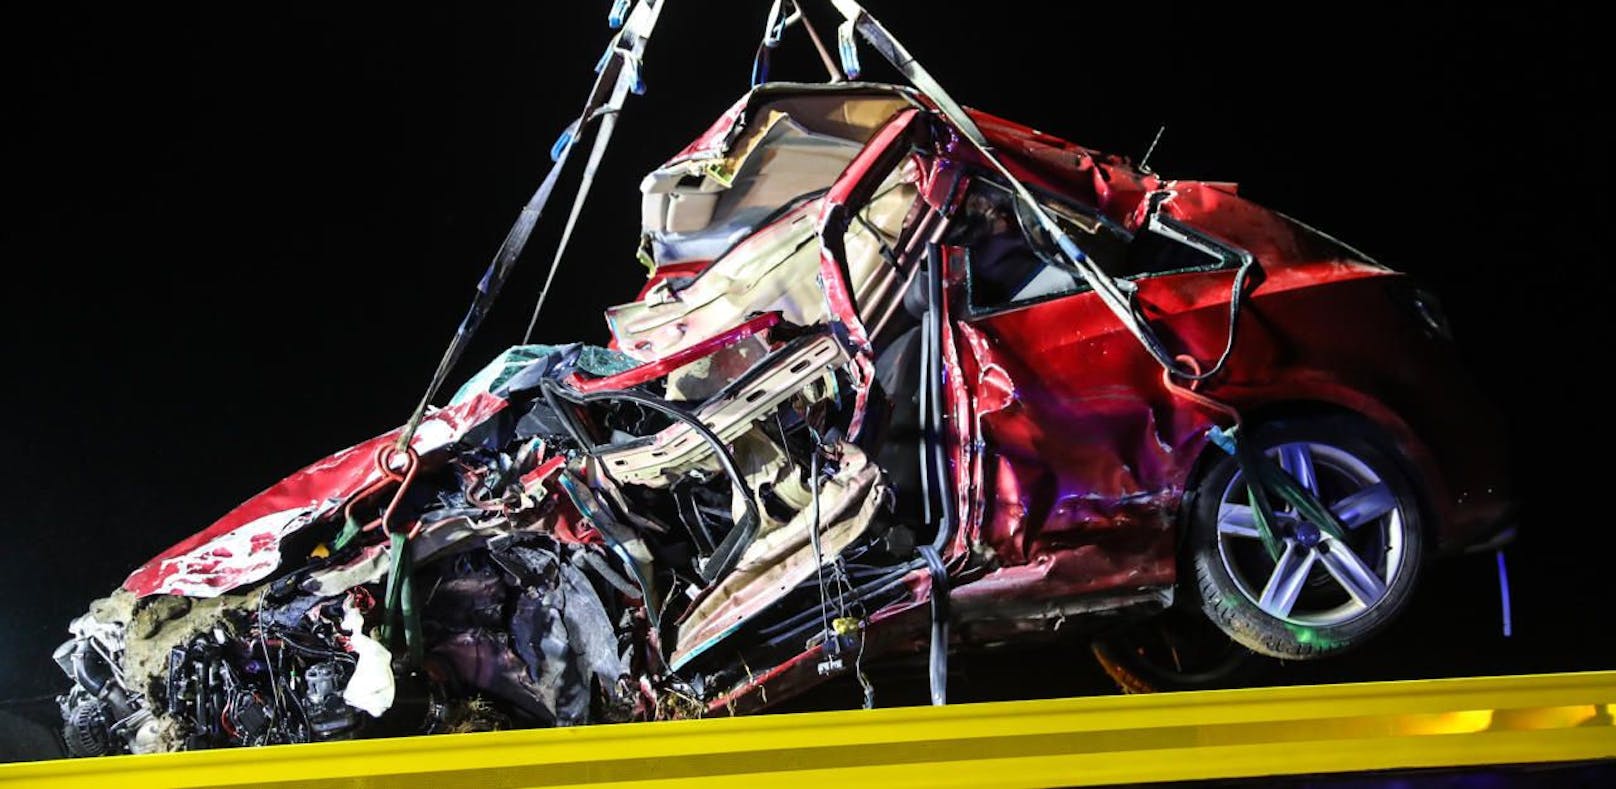 Auto bei Frontal-Crash zerfetzt, Lenker (22) tot